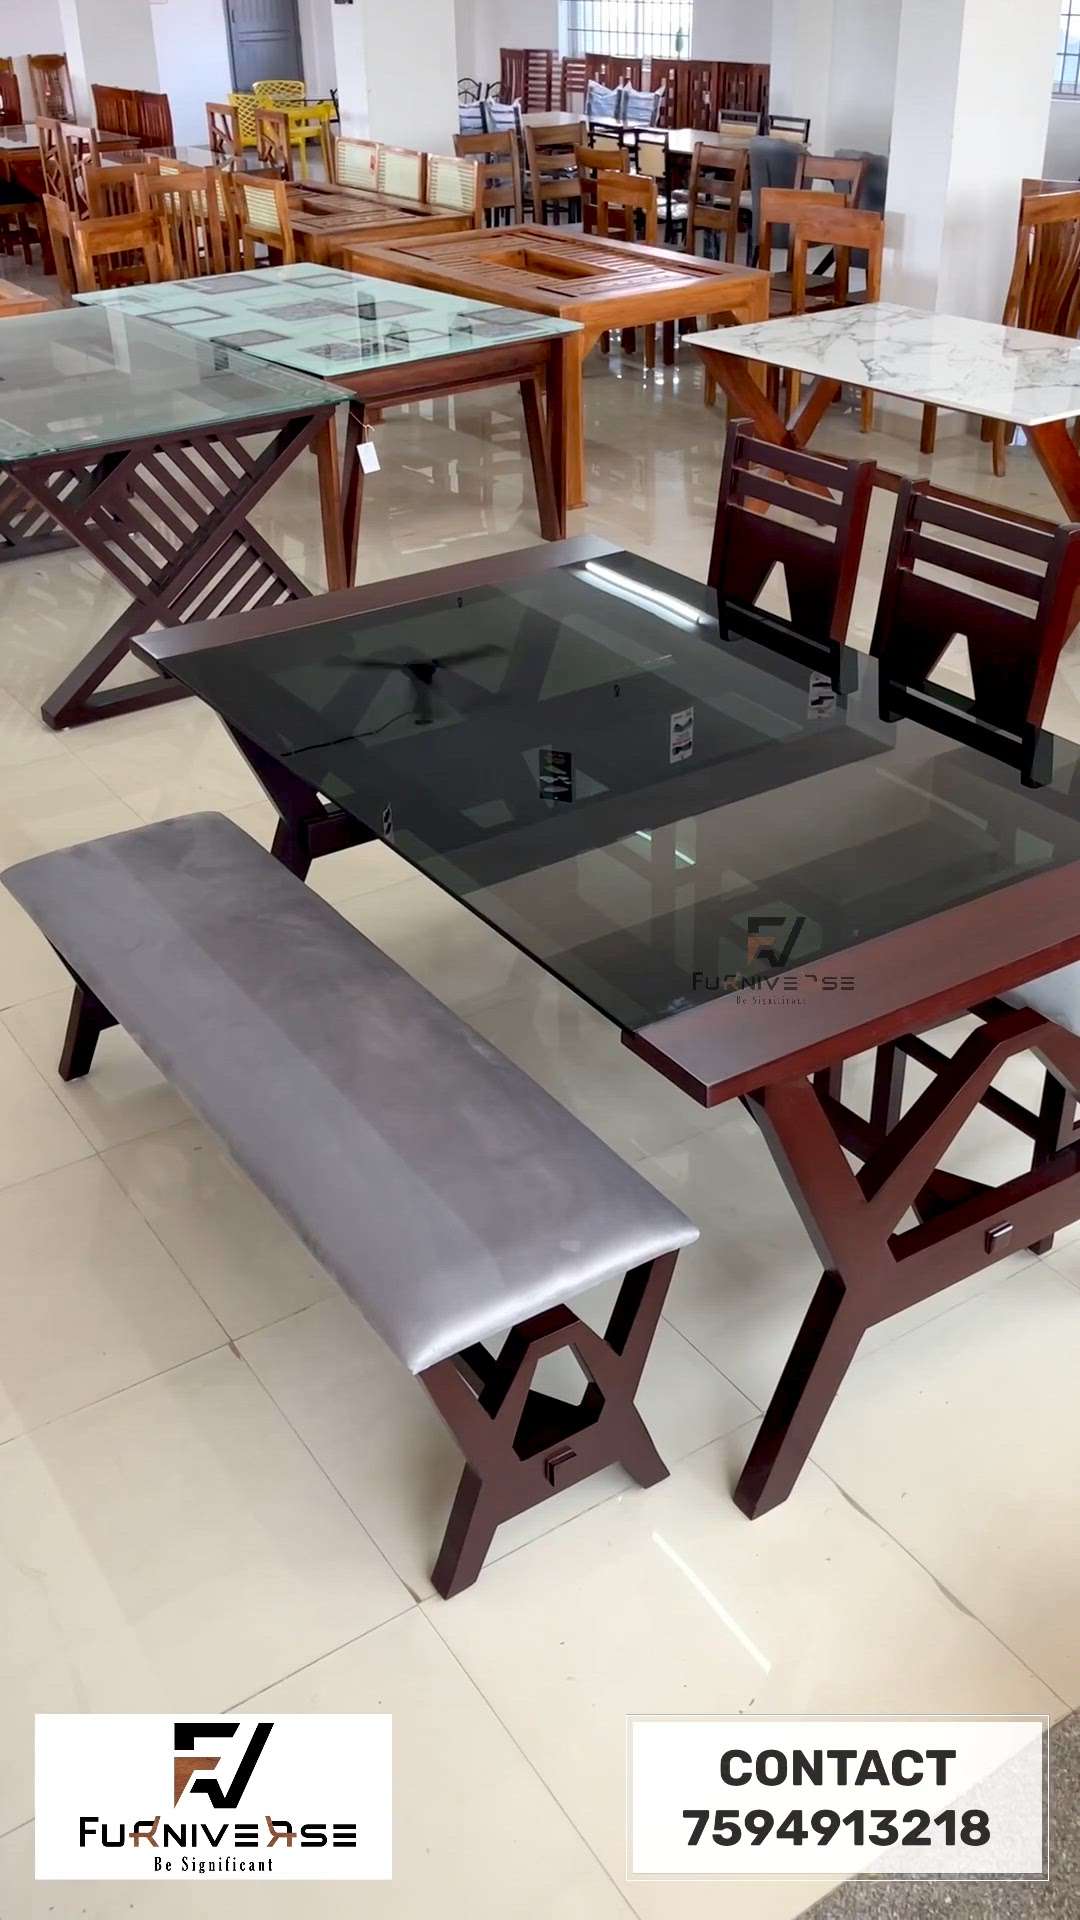 Treated Mahogany Dining Set
6 x 3.5 size
#furnitures  #furnitures  #Palakkad  #kerala